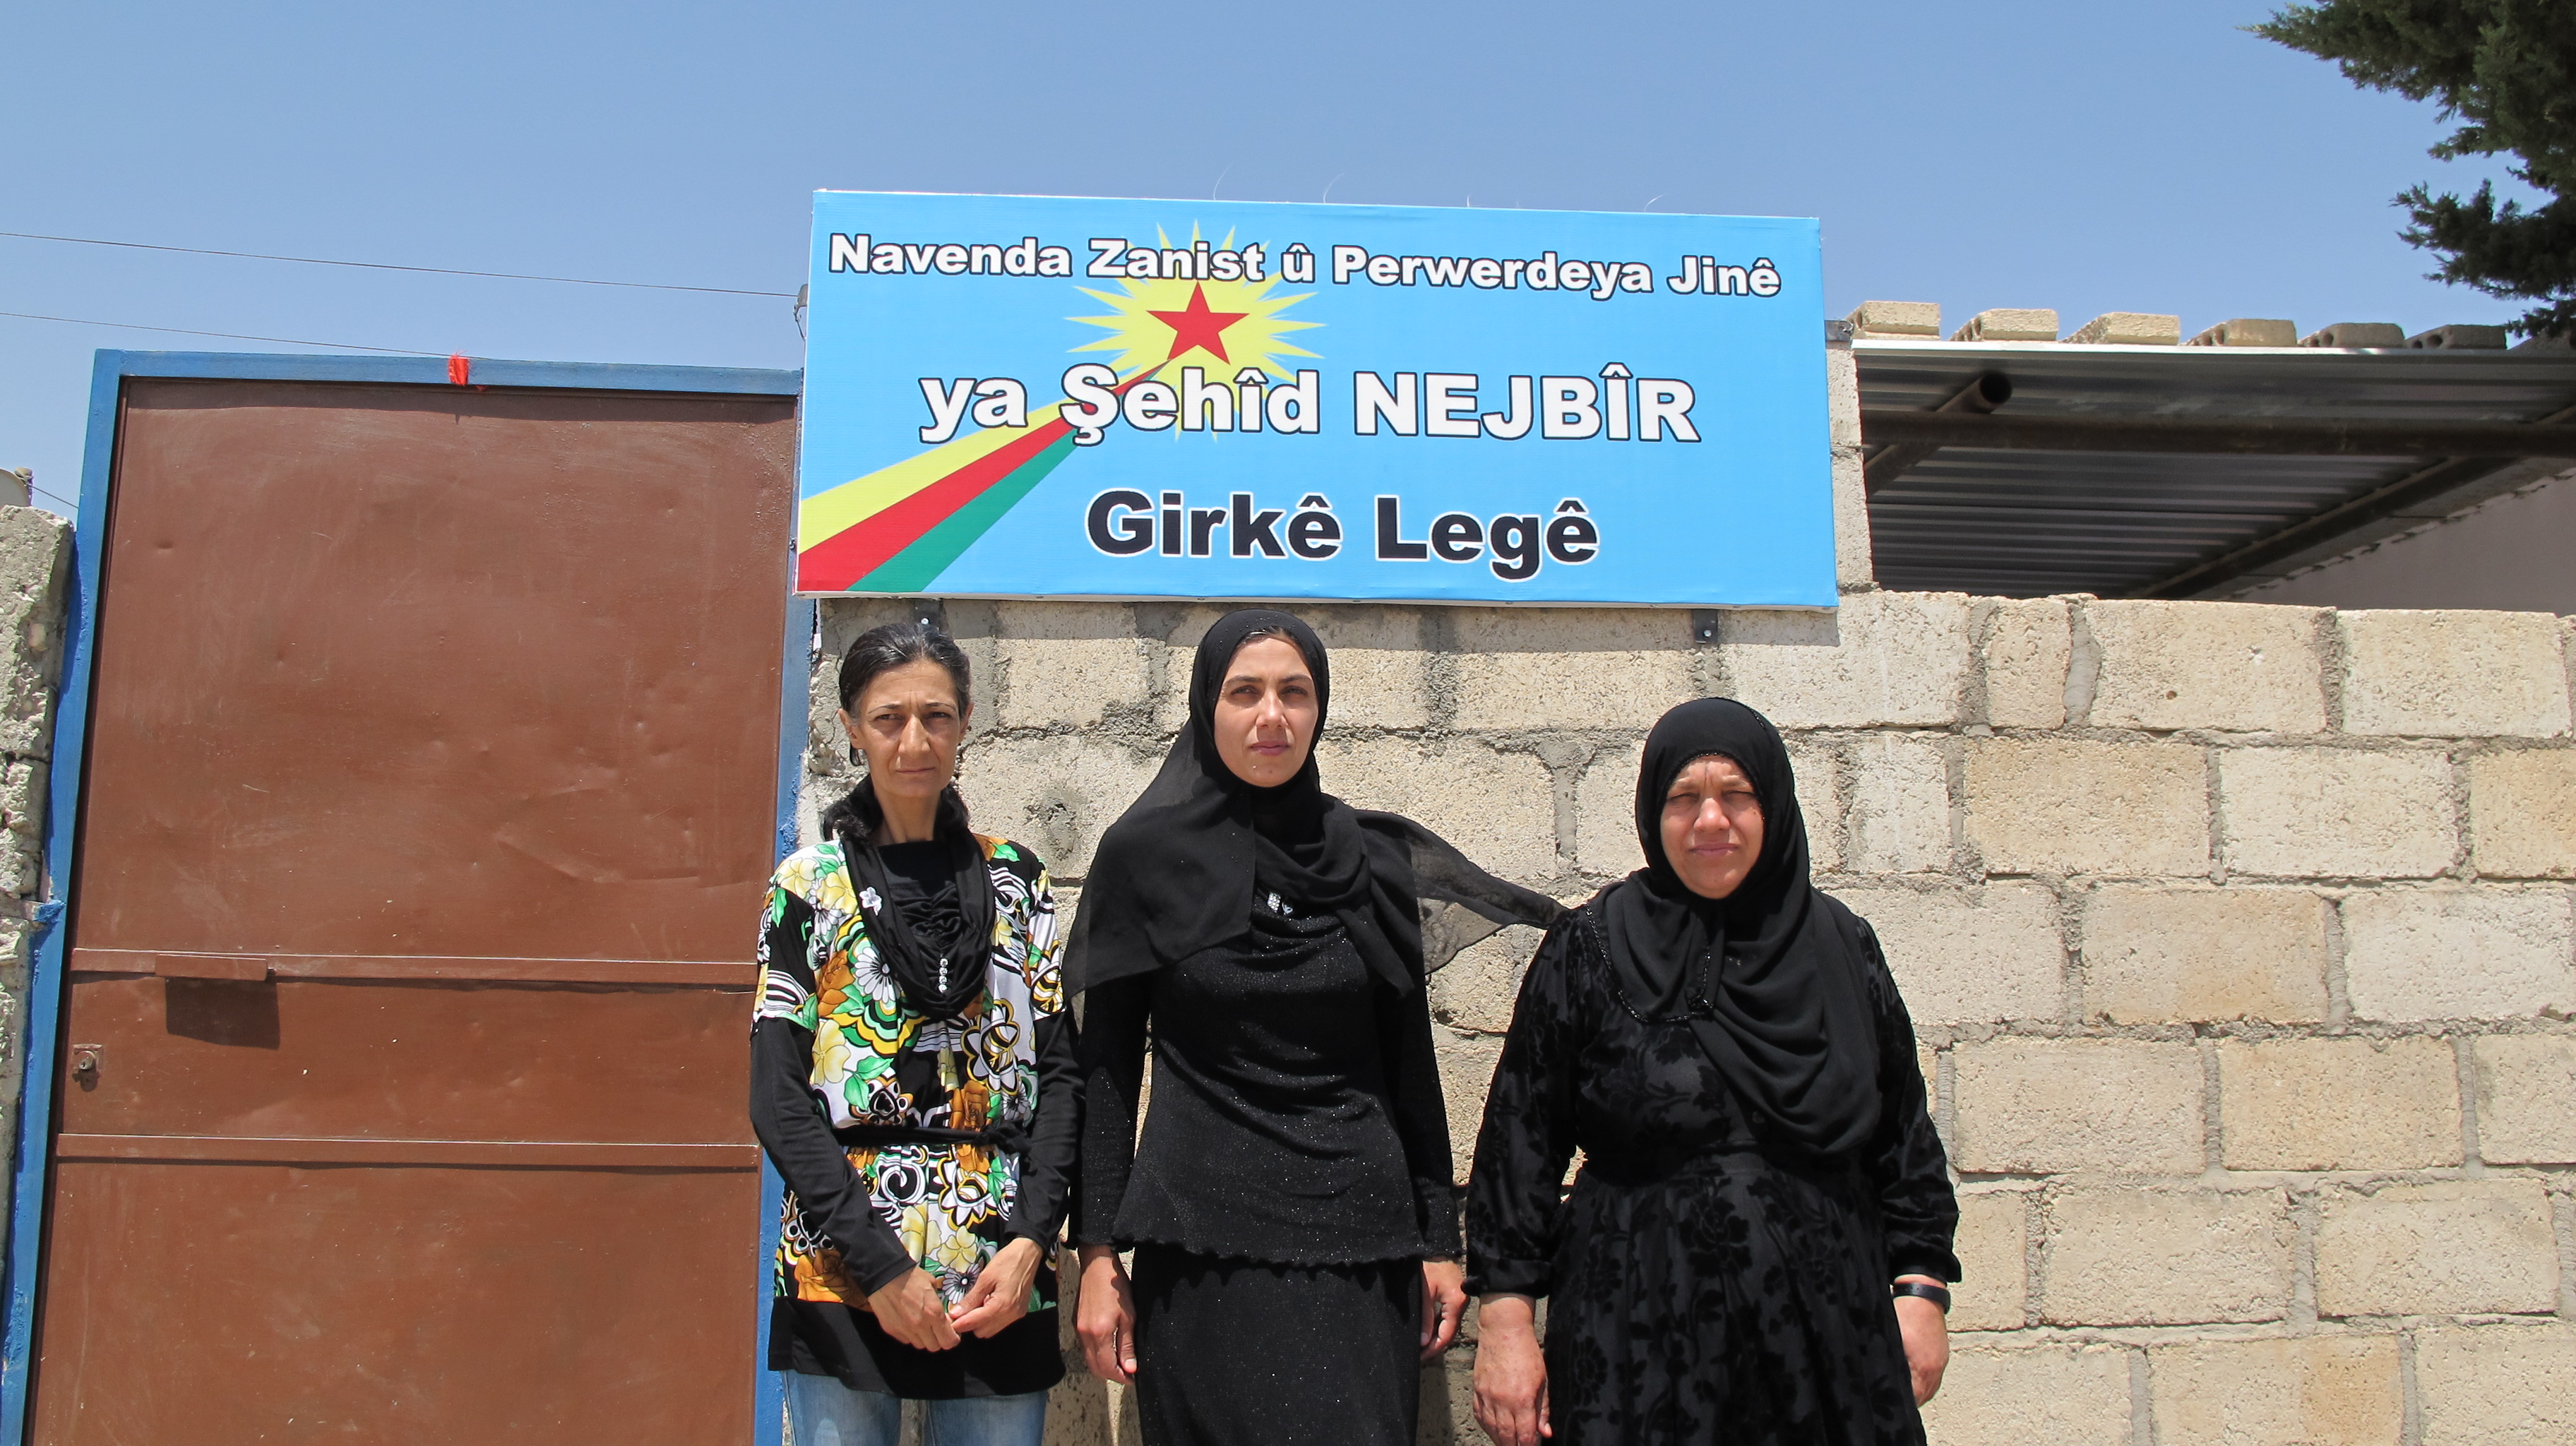 Kurdish women volunteers at the Girke Lege women’s center (Wikipedia)